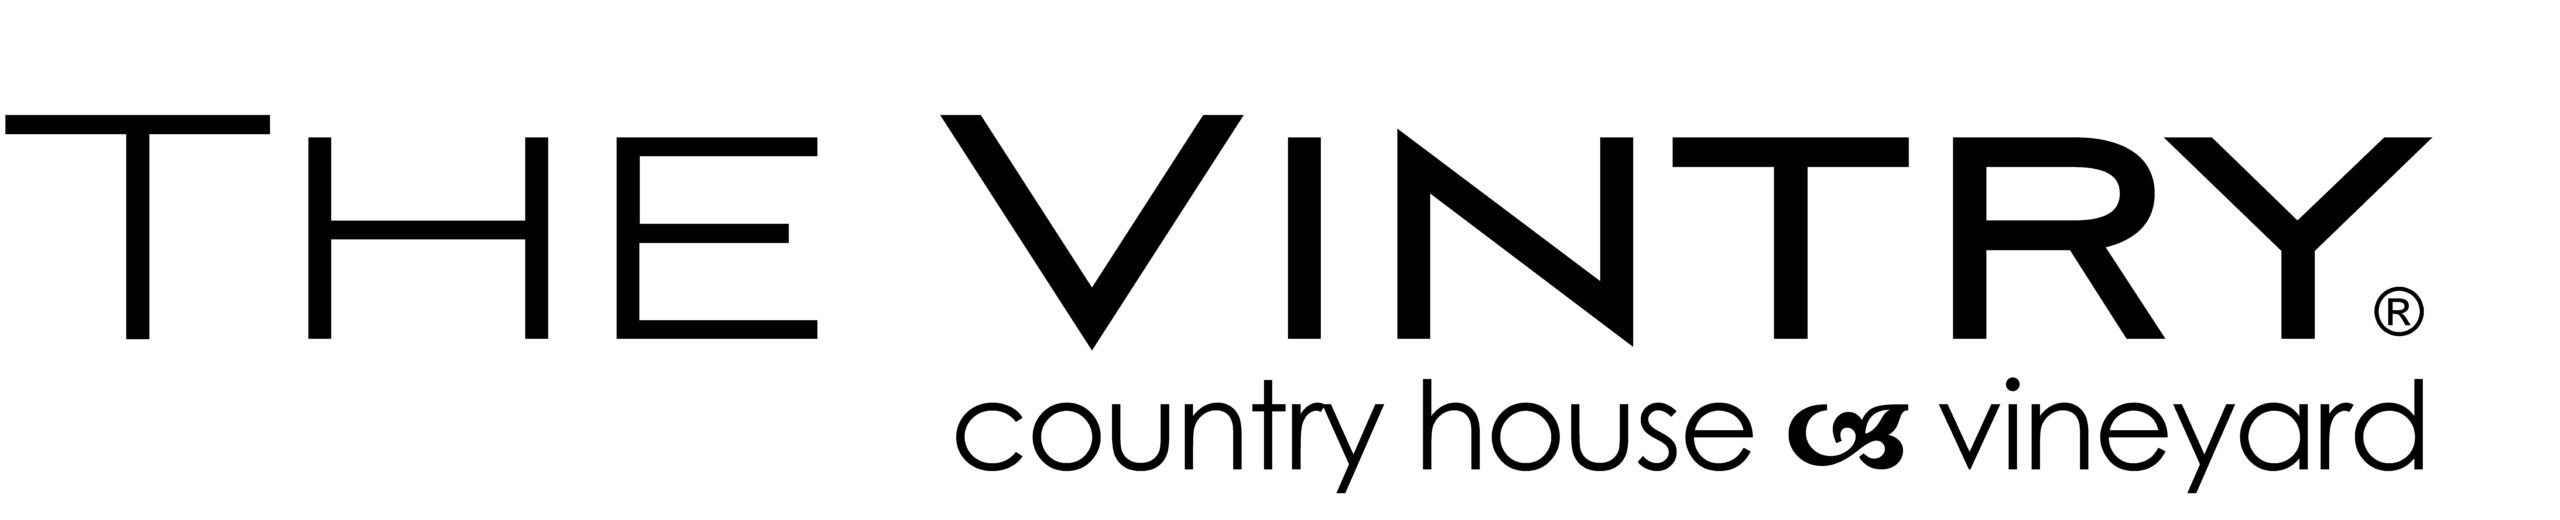 The Vintry Black Logo Jan 2008 - The Vintry